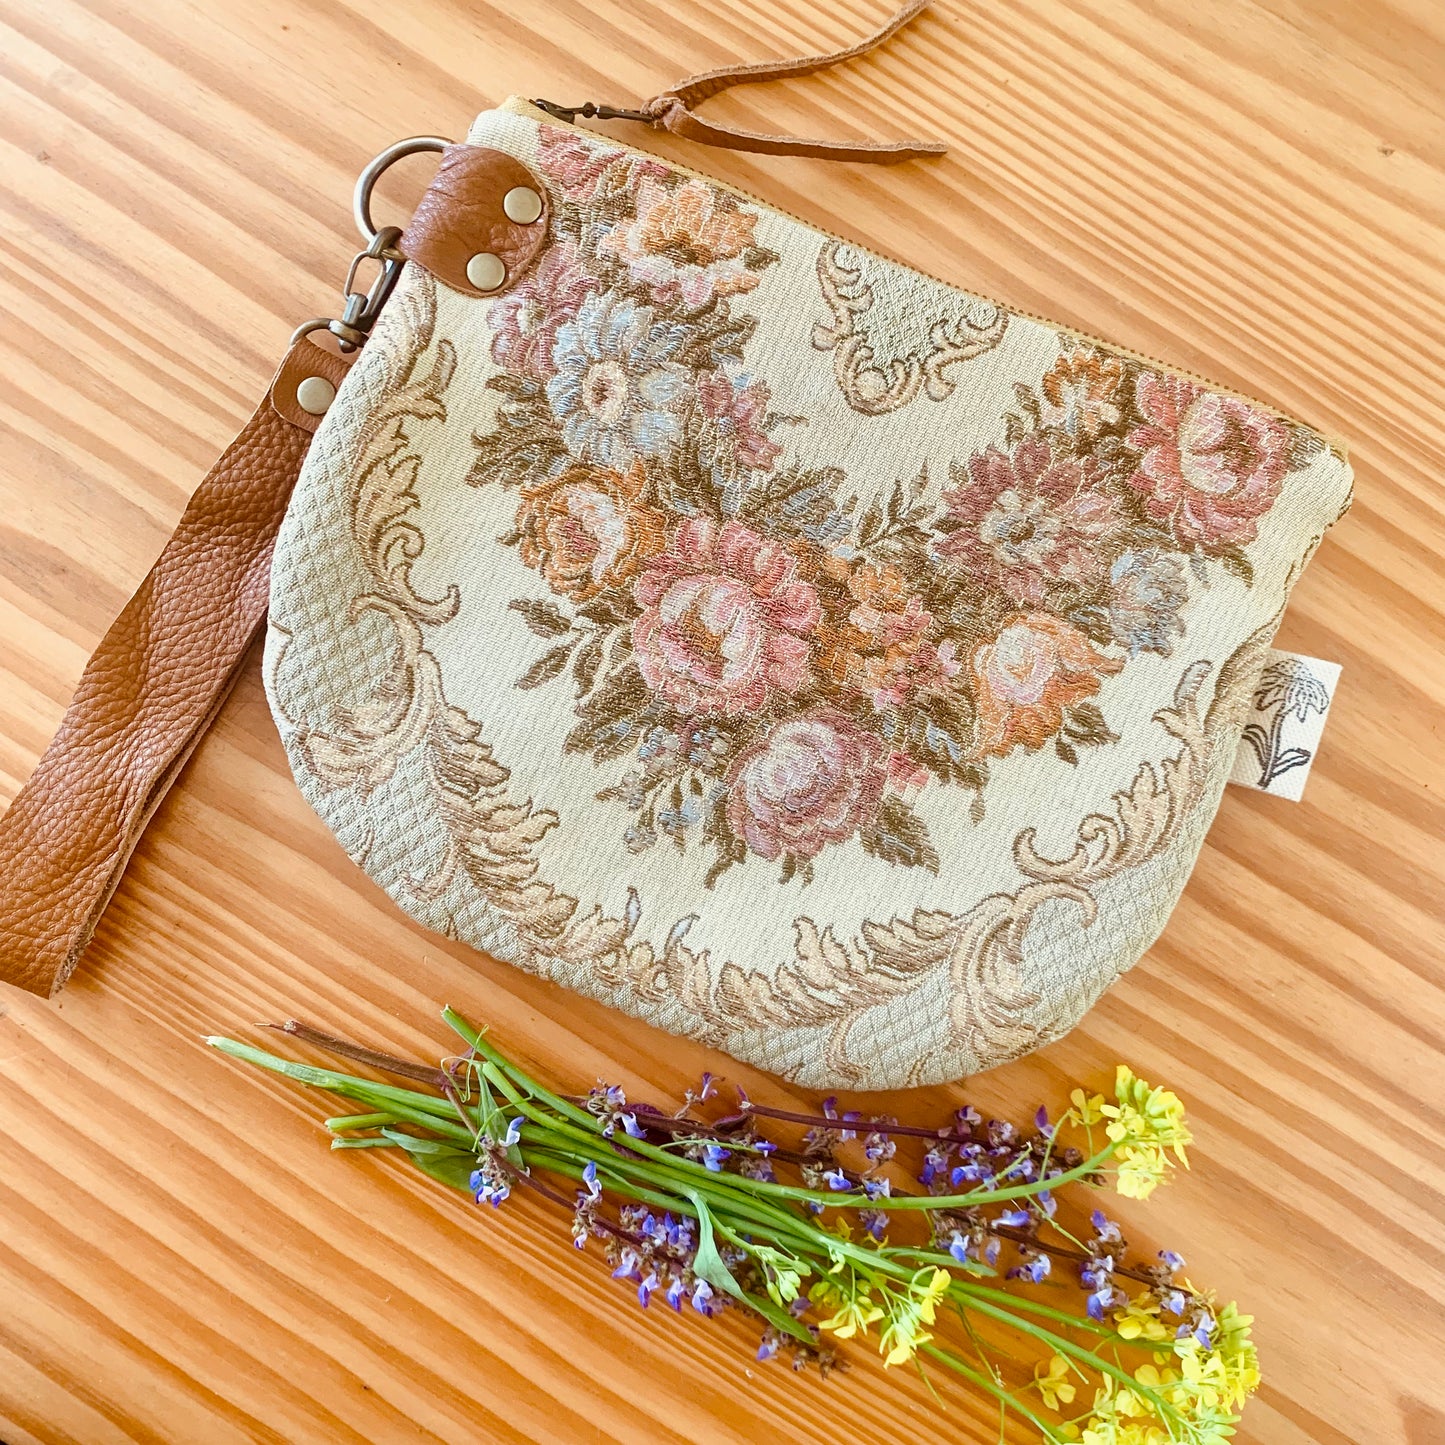 Vintage rose tapestry clutch purse